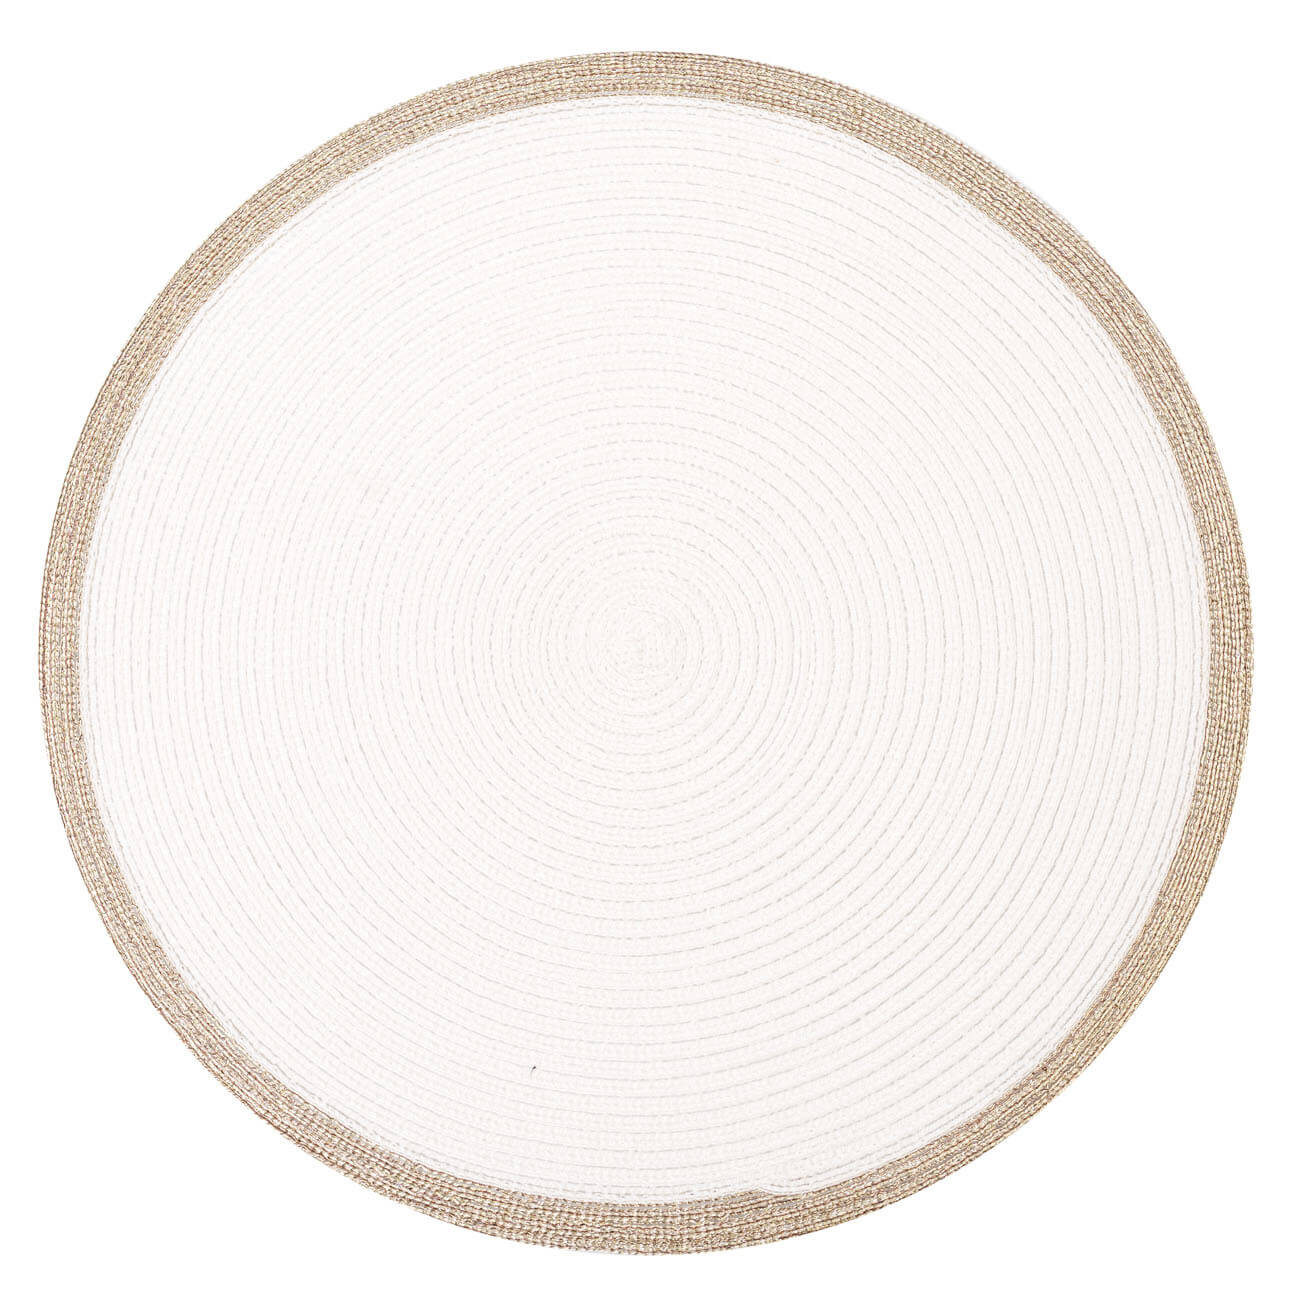 Kuchenland Салфетка под приборы, 38 см, полиэстер, круглая, белая, Золотистая кайма, Rotary rim